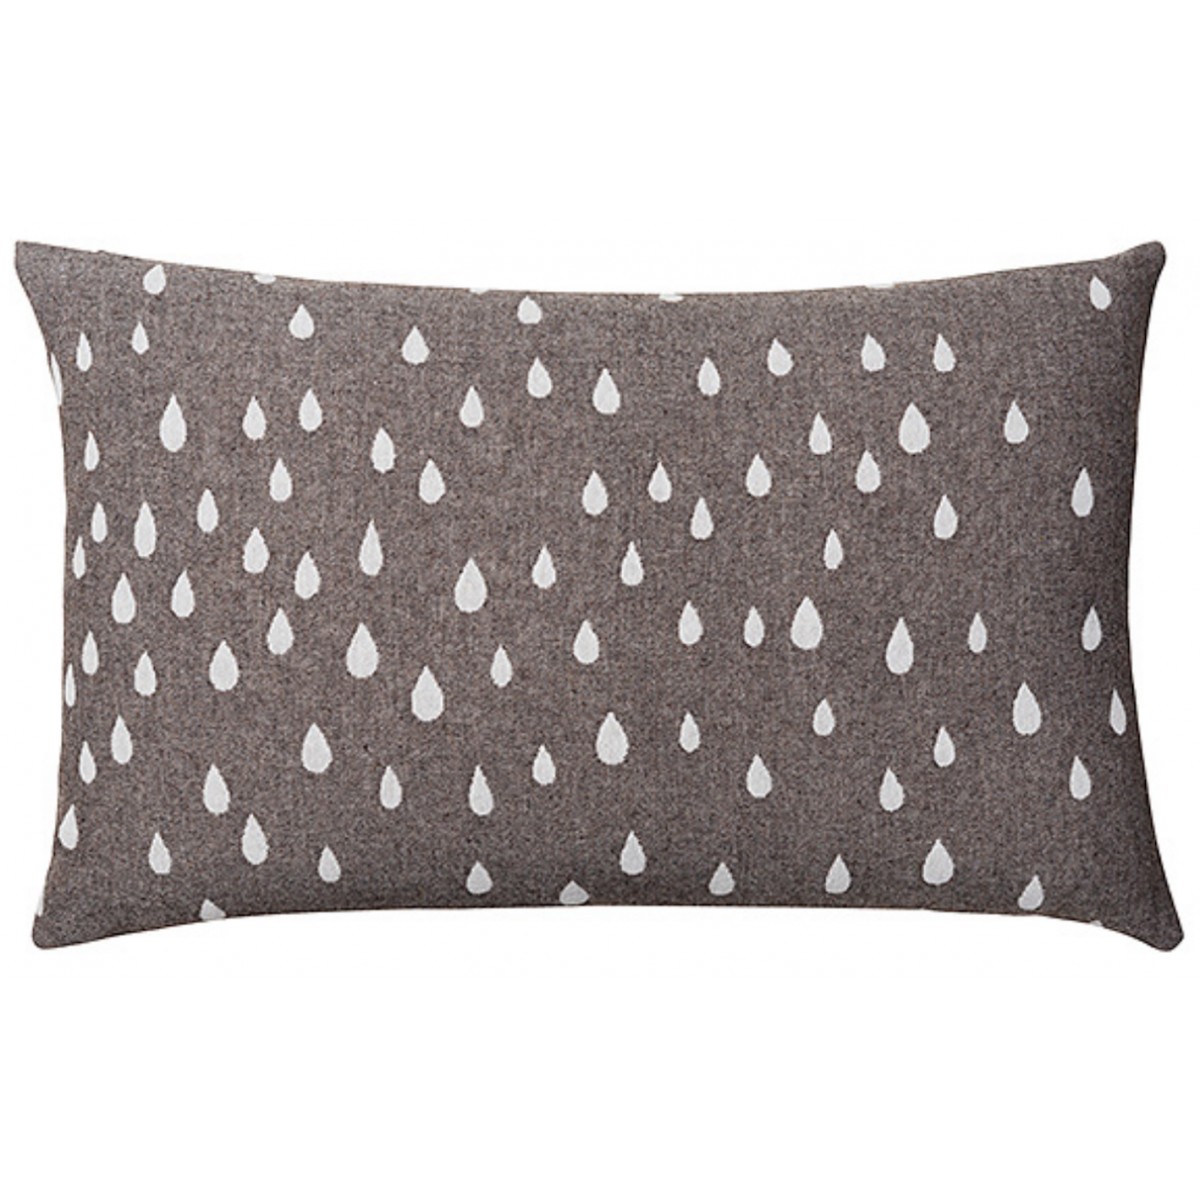 clay - cushion - Raining - 60x40cm